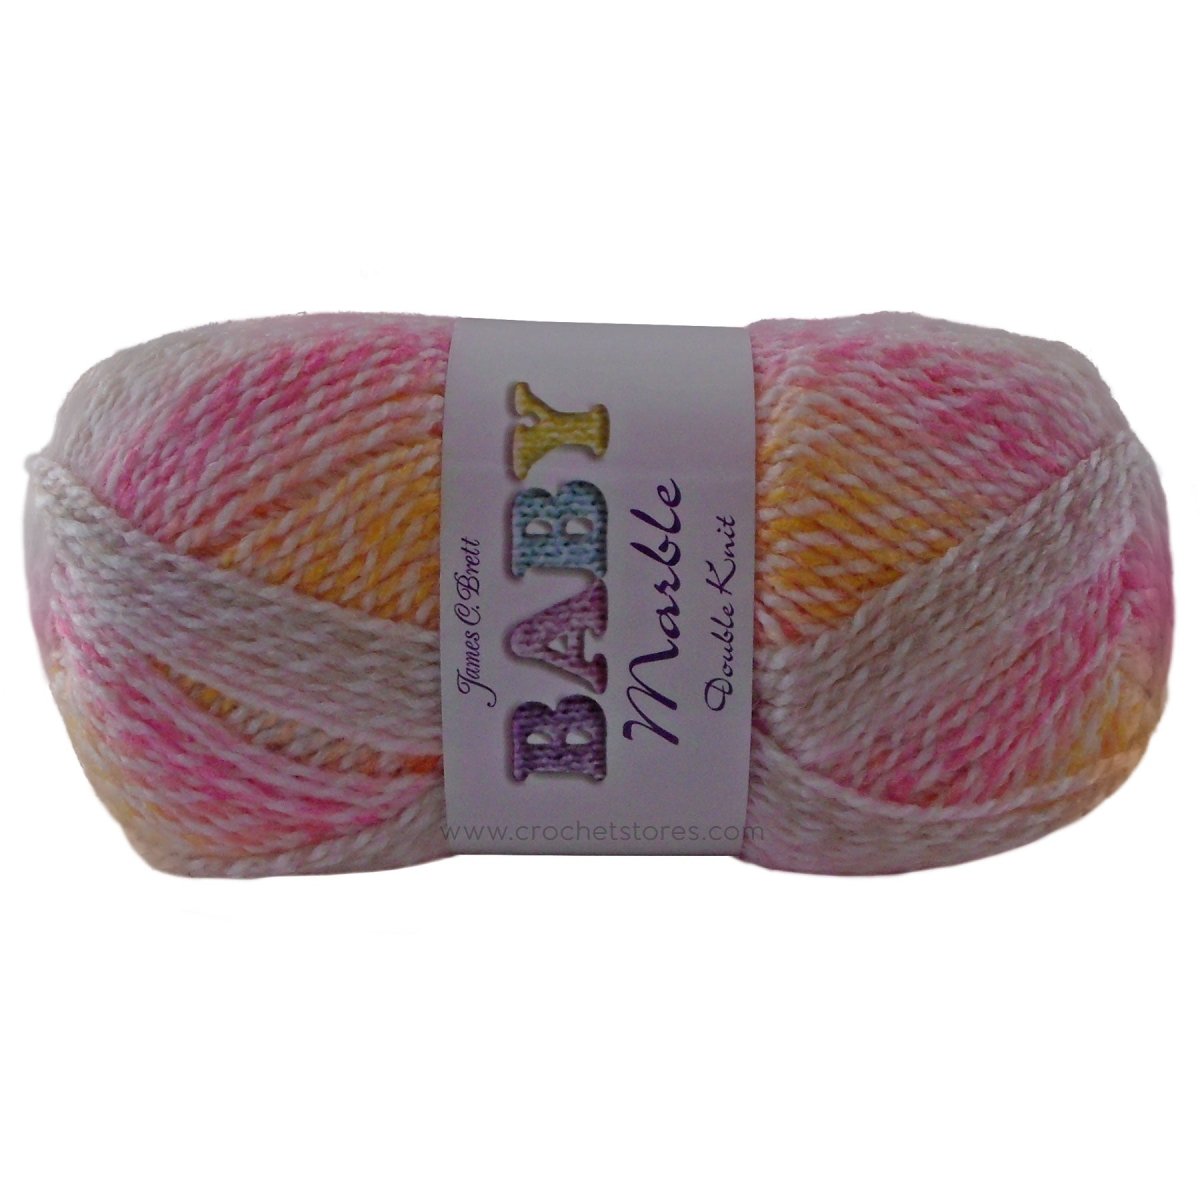 BABY MARBLE DK - CrochetstoresBM175055559061489